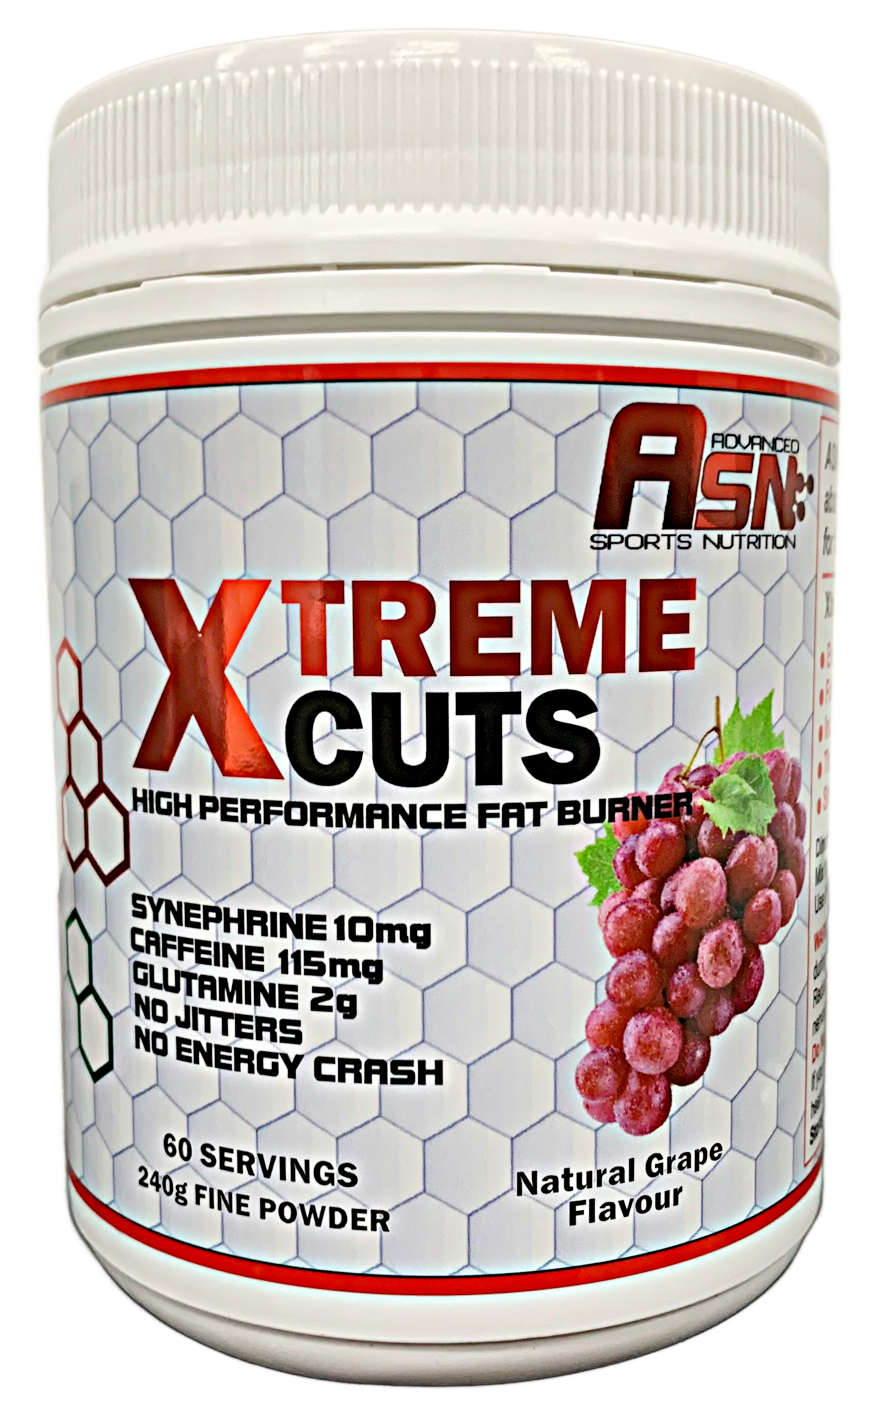 Xtreme Cuts PLUS Fat Loss